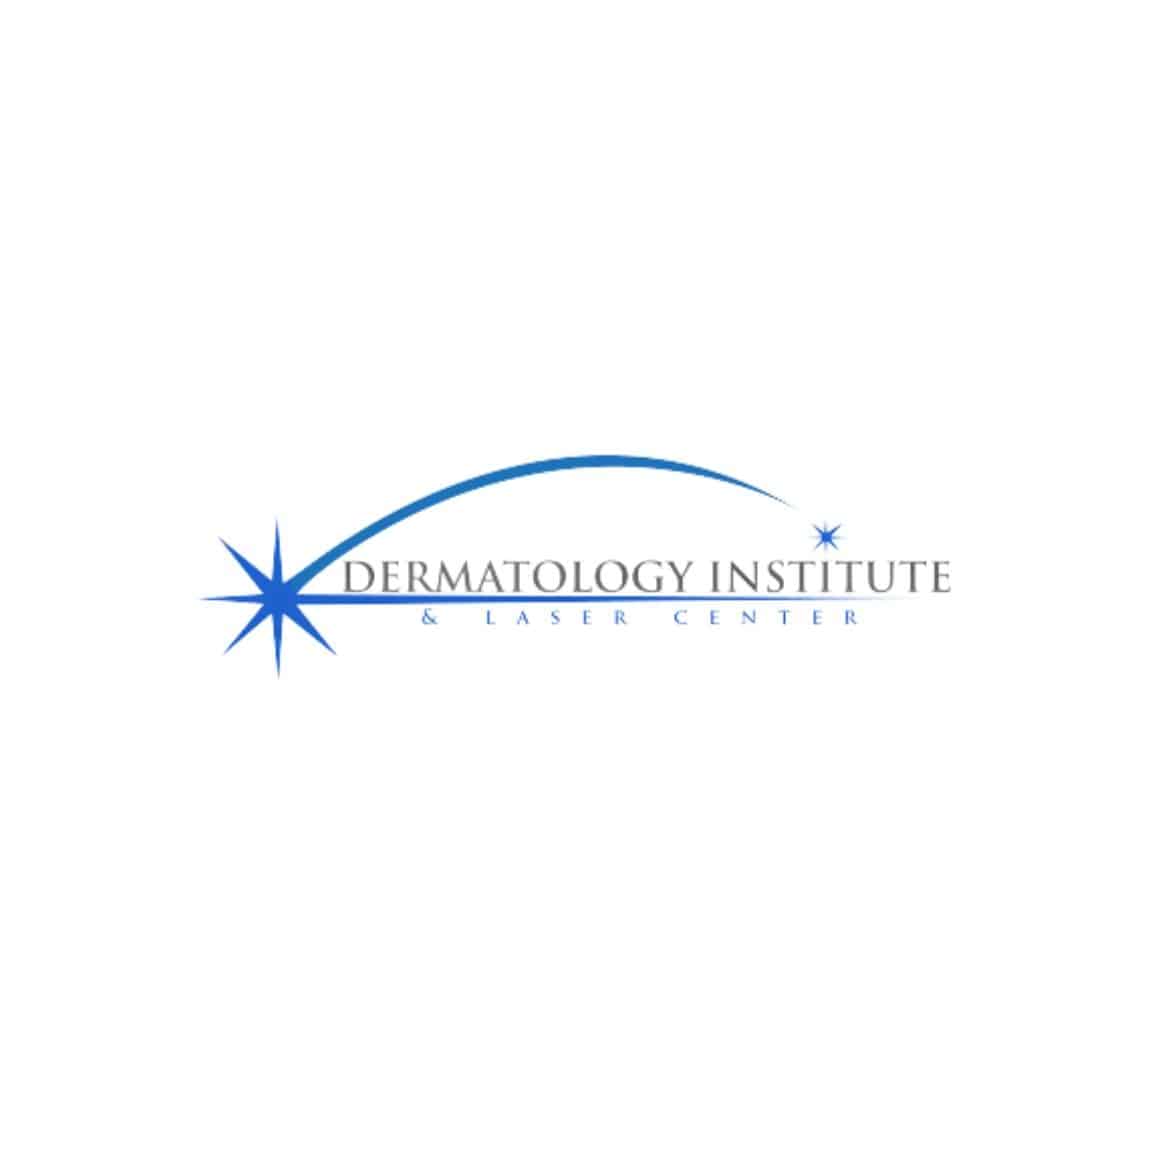 Dermatology Institute and Laser Center logo